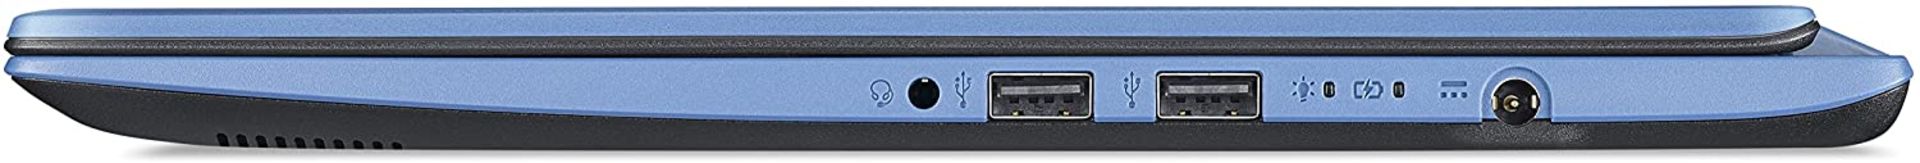 (T9) 1 x GRADE B - Acer NX.GQ9EK.001 Aspire 1 14-Inch Notebook - (Denim blue) (Intel Pentium N4... - Image 5 of 5